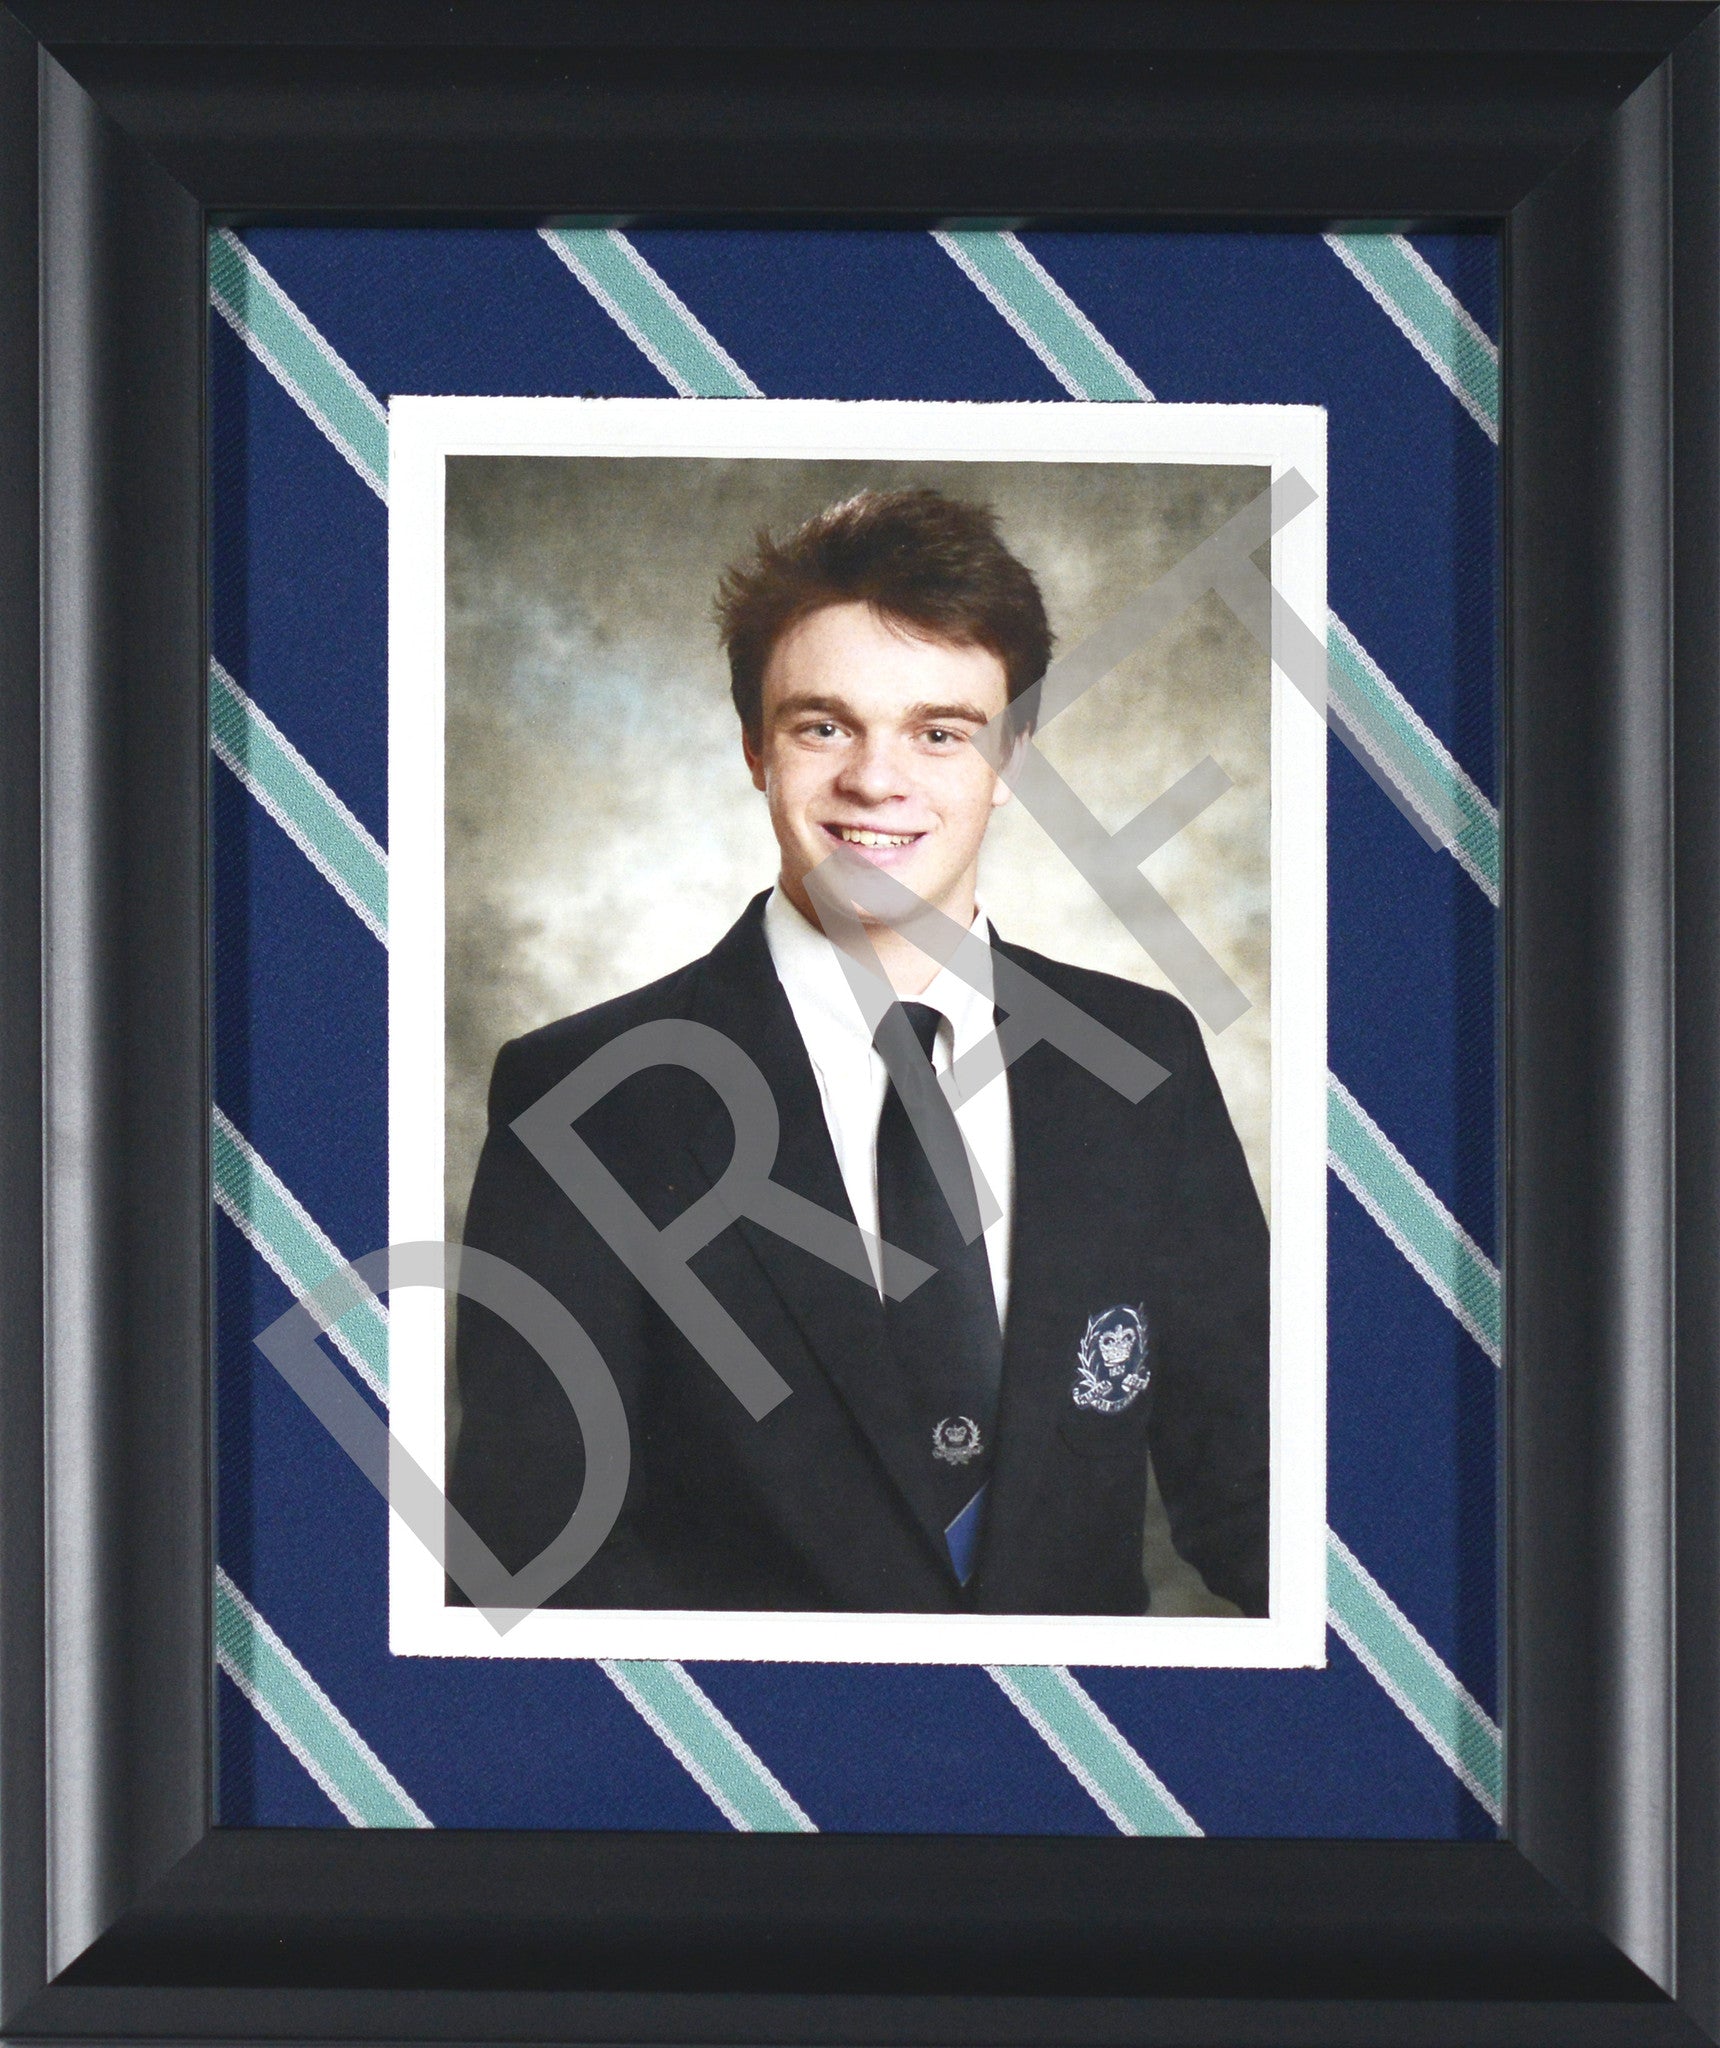 Upper School House Tie Frame 11" x 14" Portrait Orientation